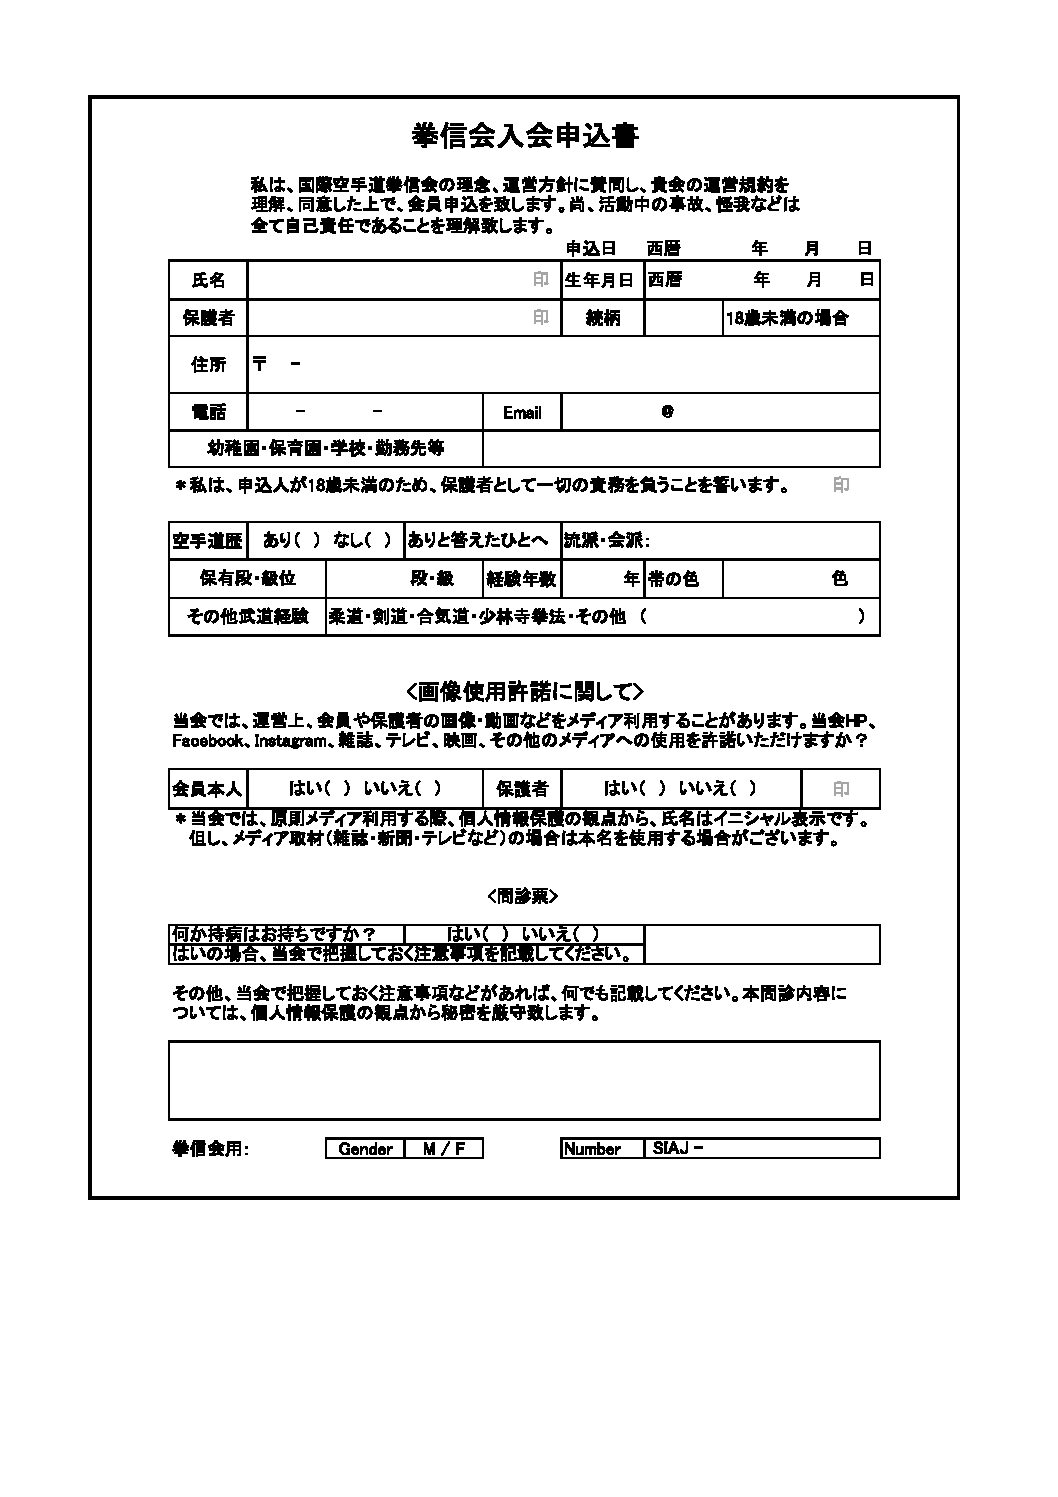 Kenshinkai_Application_2022-2